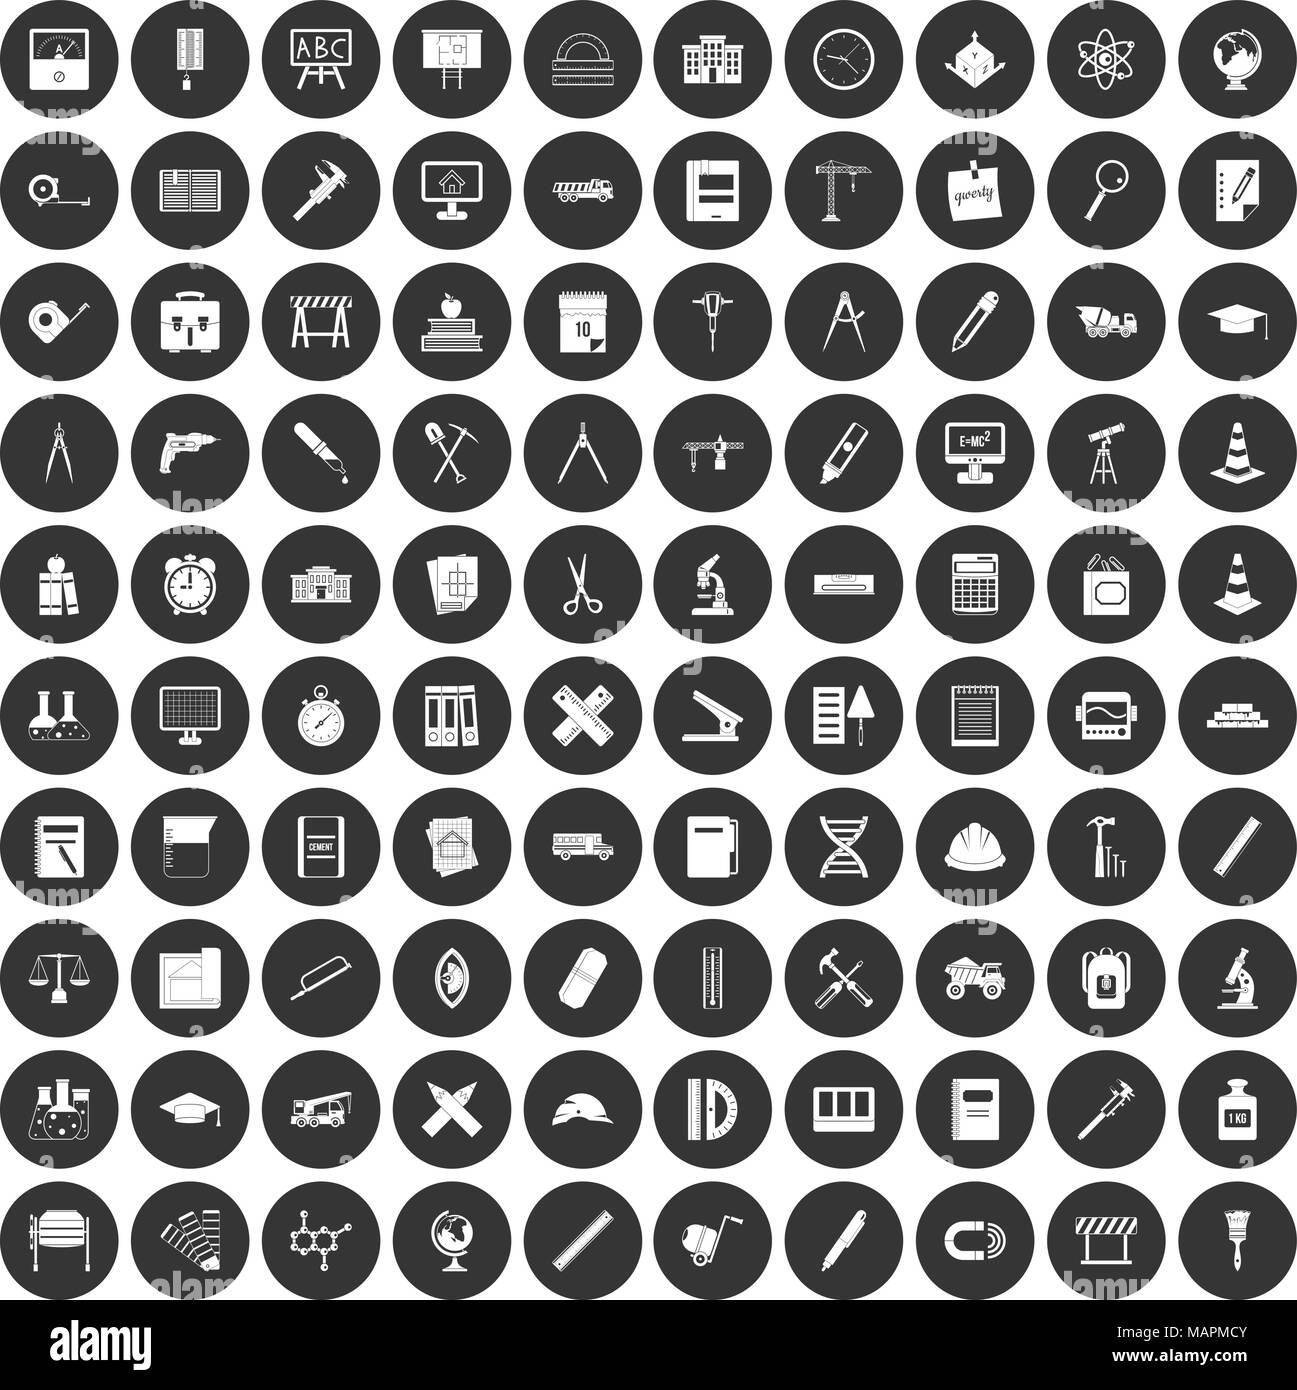 100 Kompass Icons Set schwarz Kreis Stock Vektor